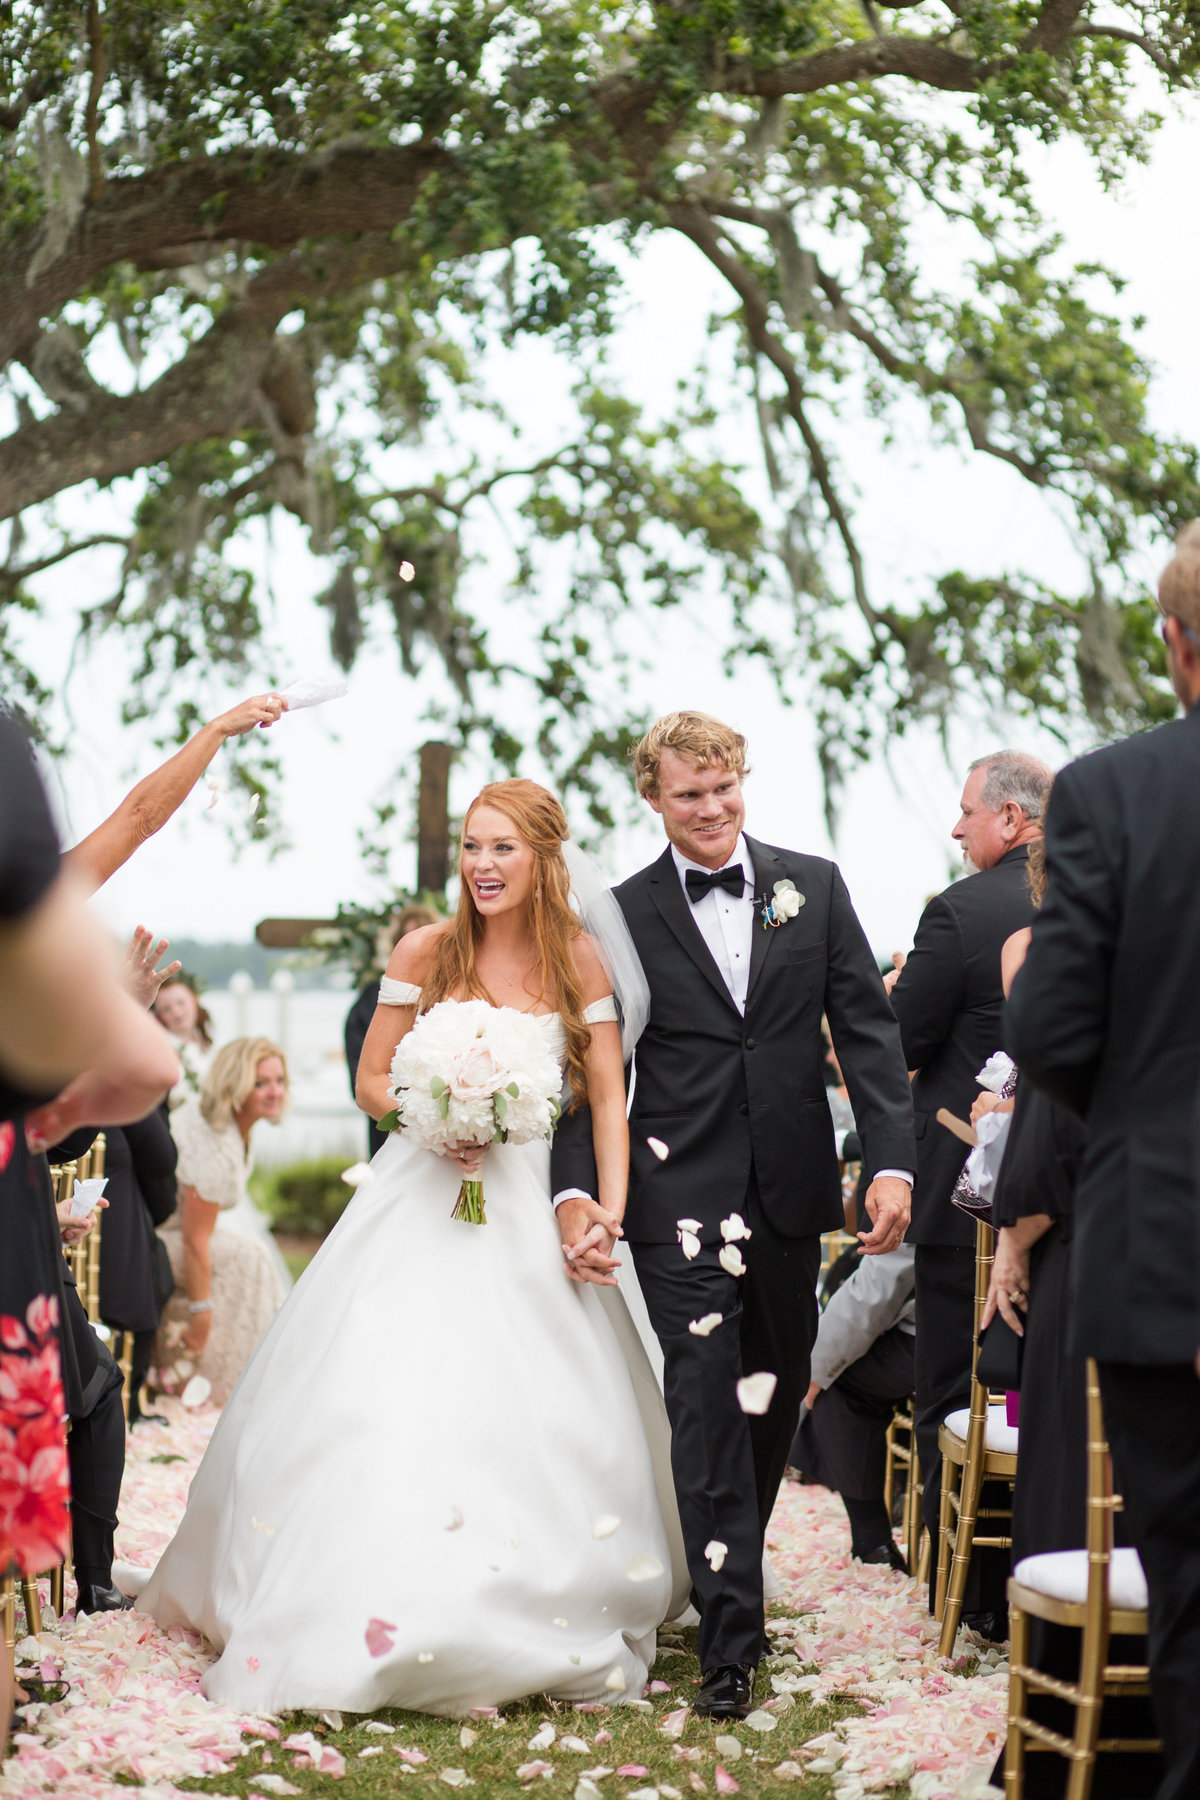 bride and groom walking down aisle with rose petals thrown at them. savannah yacht club wedding.